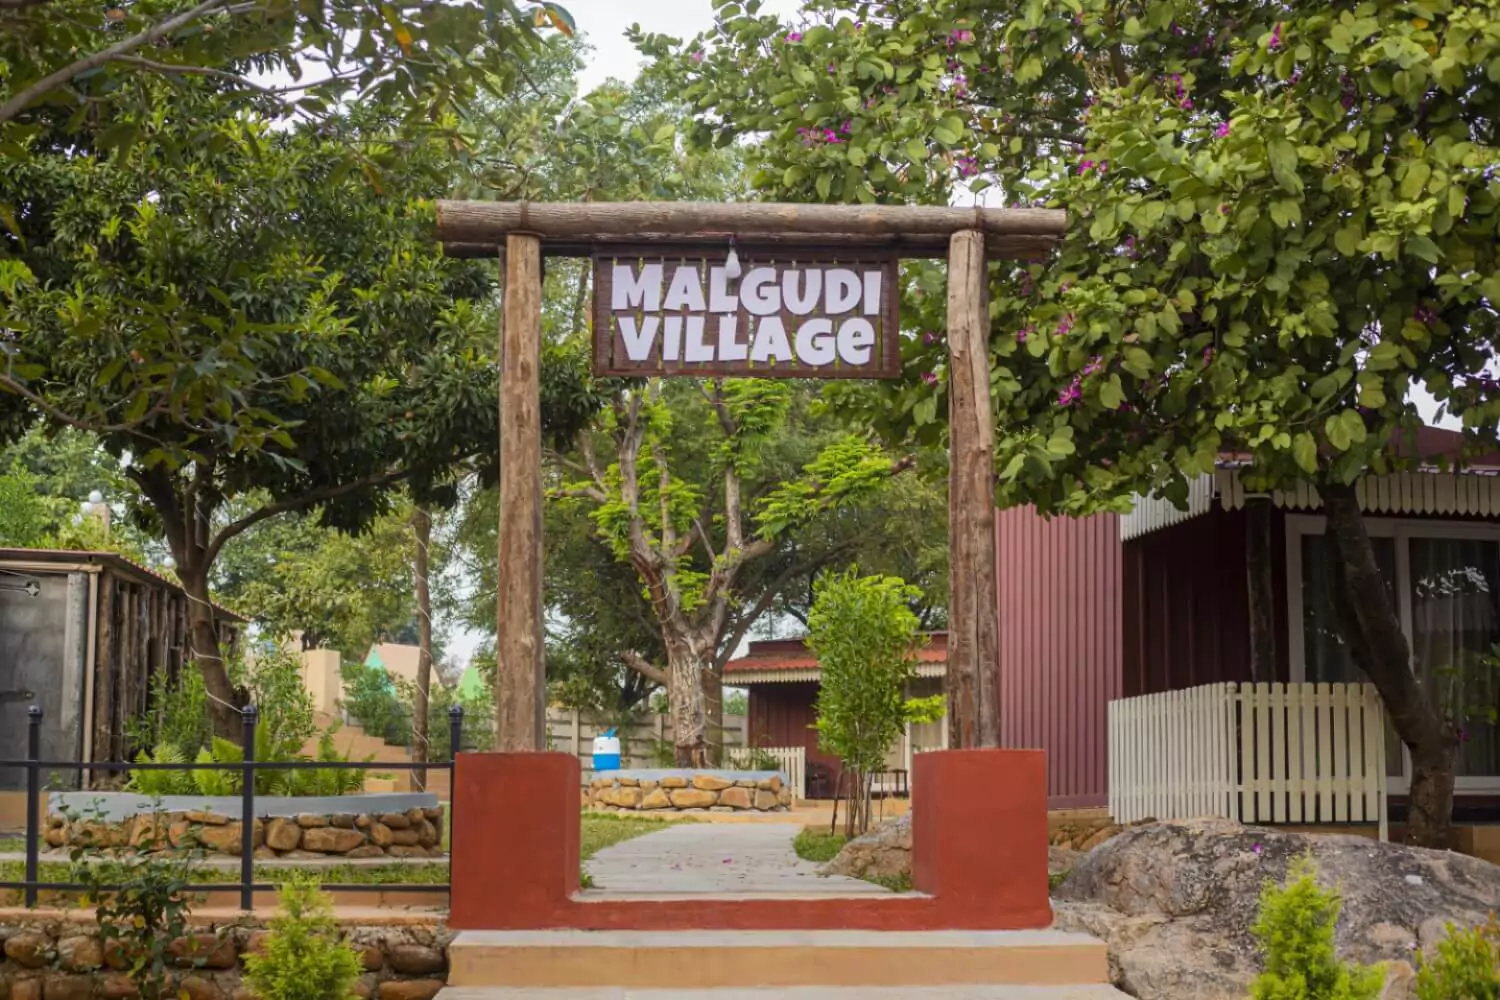 Malgudi Village